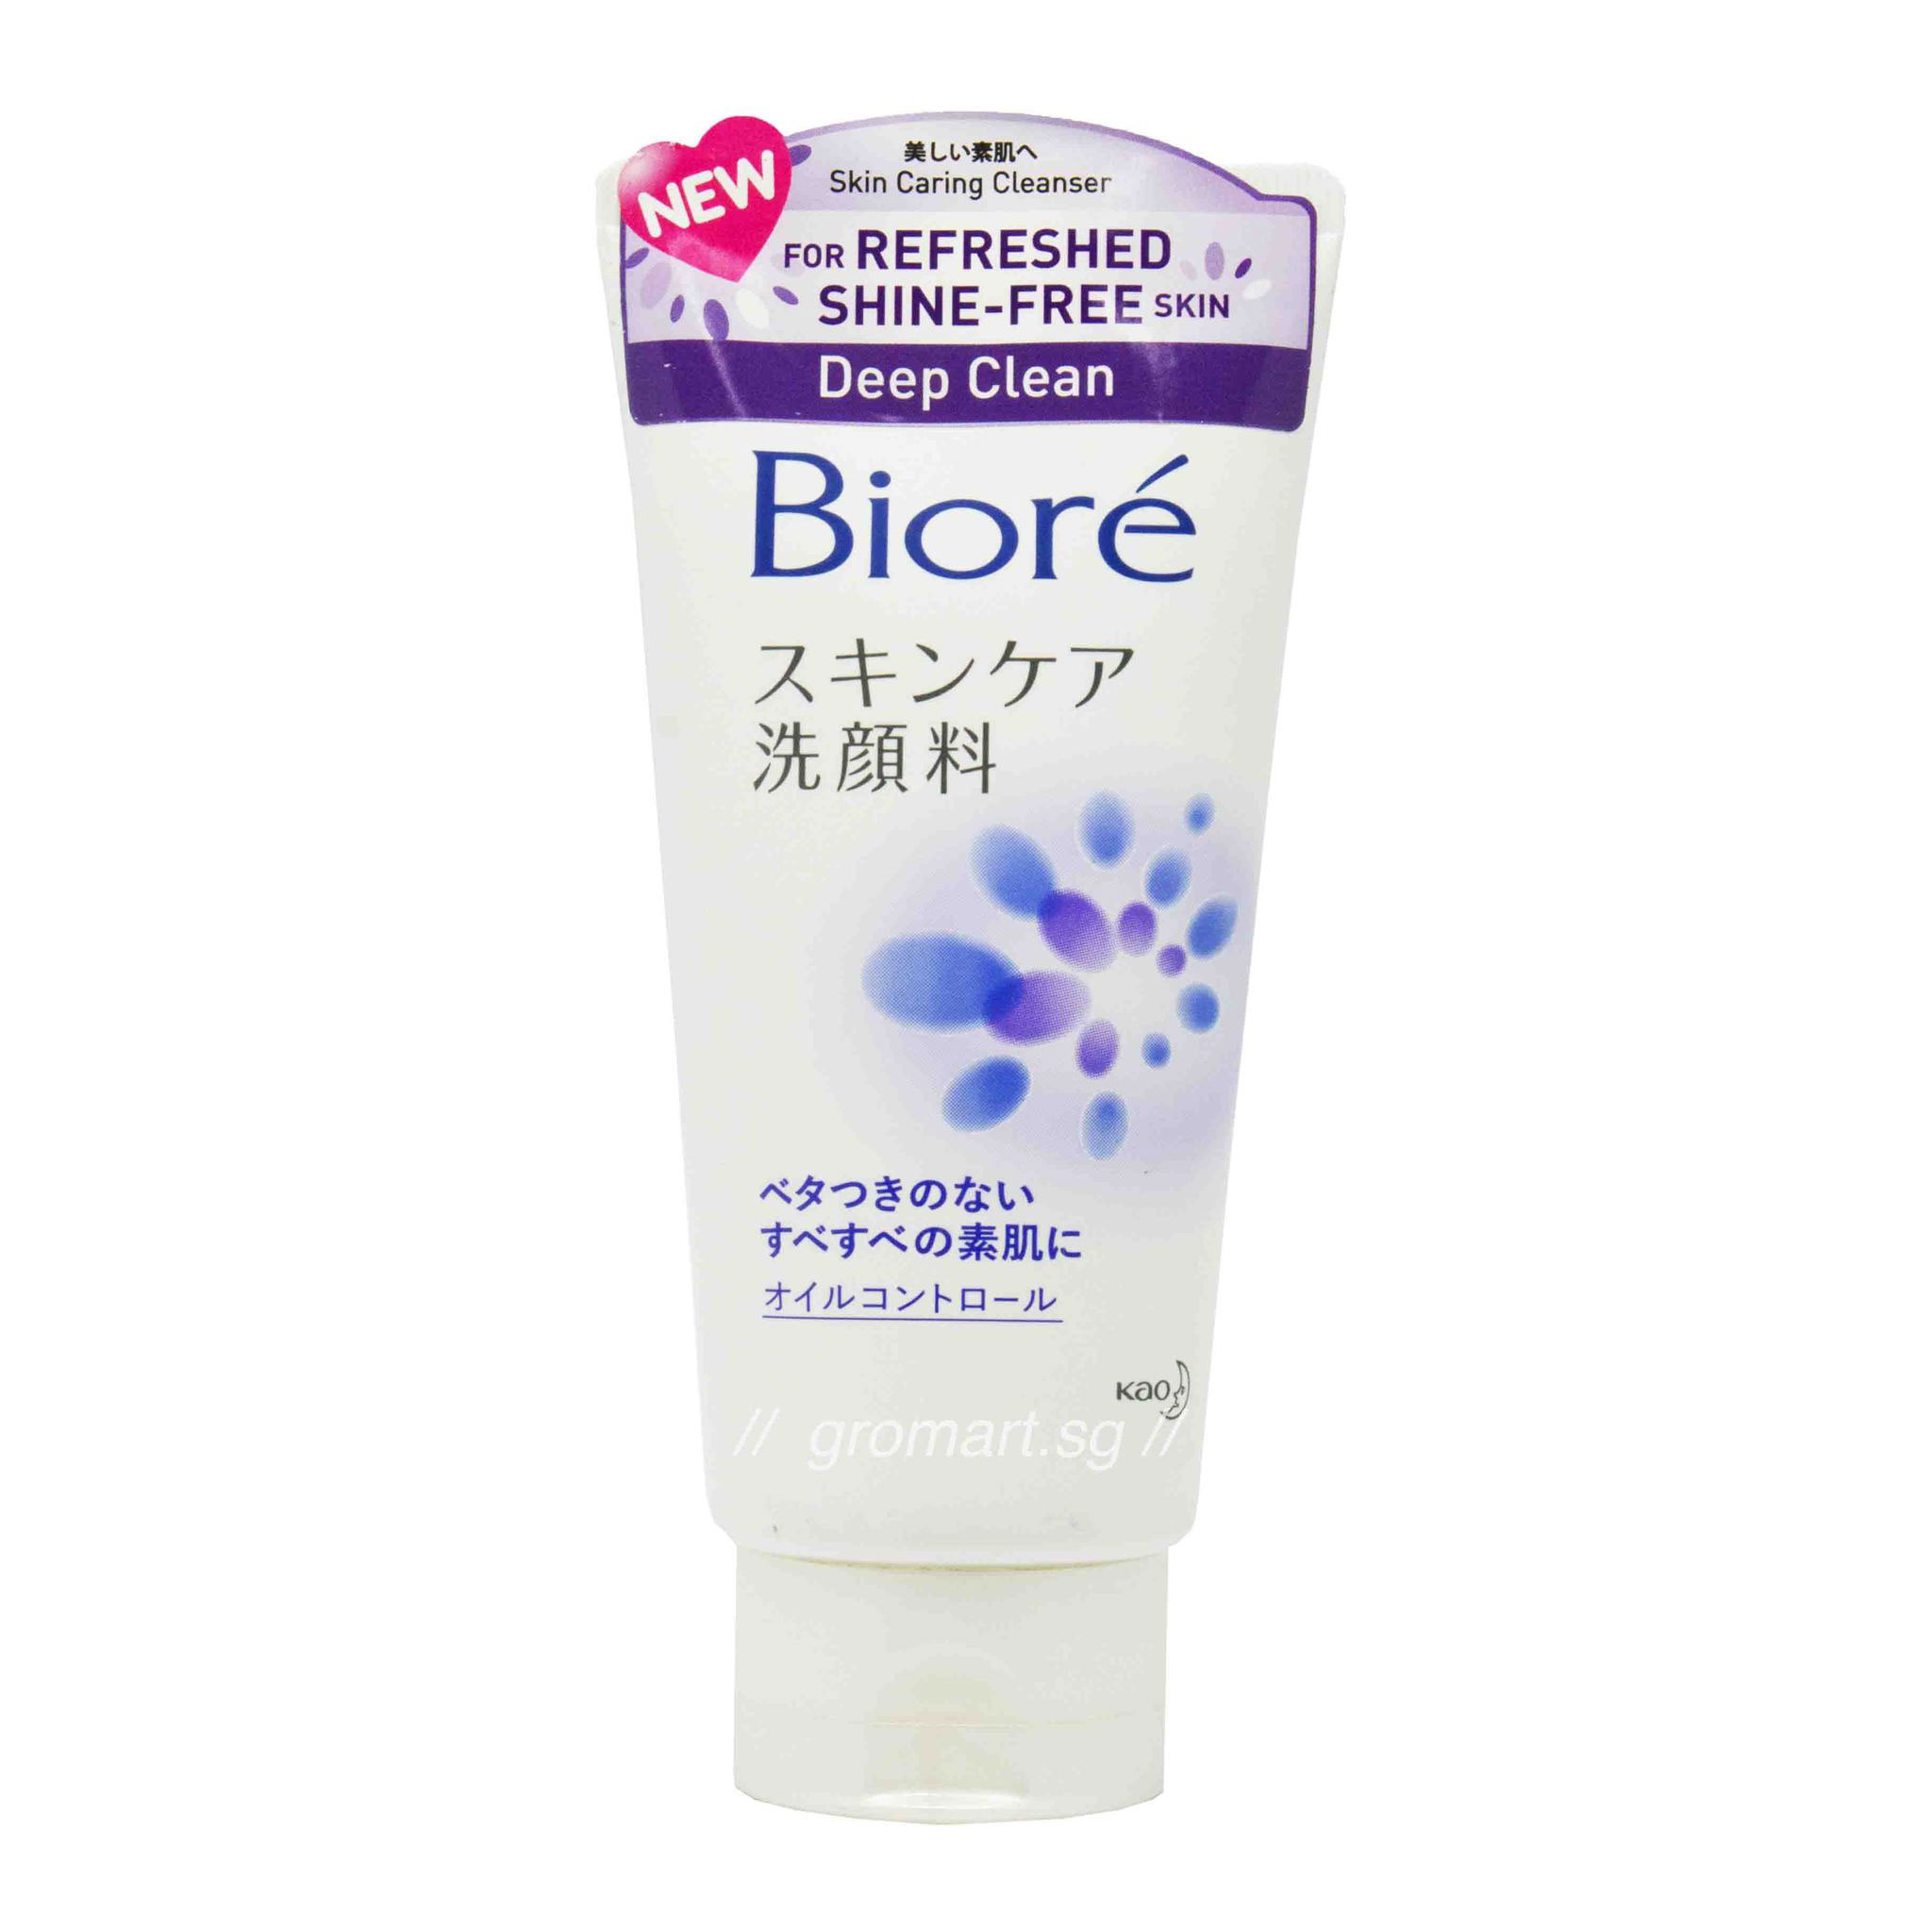 Biore Facial Foam (Deep Clean)